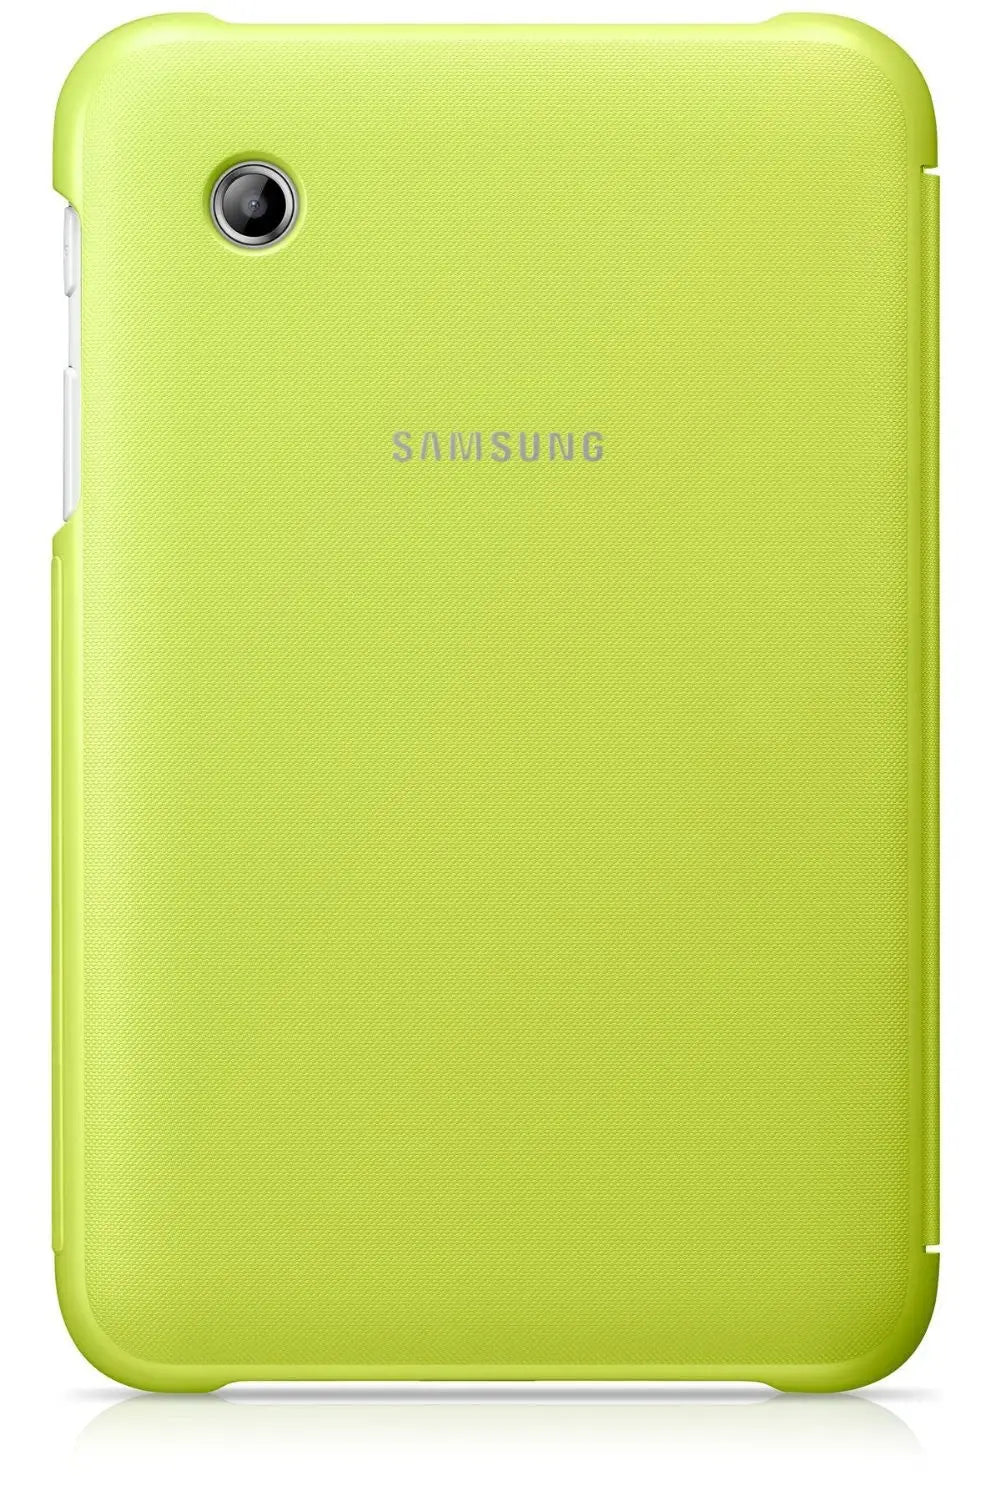 Samsung EFC1G5S Etui à rabat pour Samsung Galaxy Tab 2 7" Vert Samsung